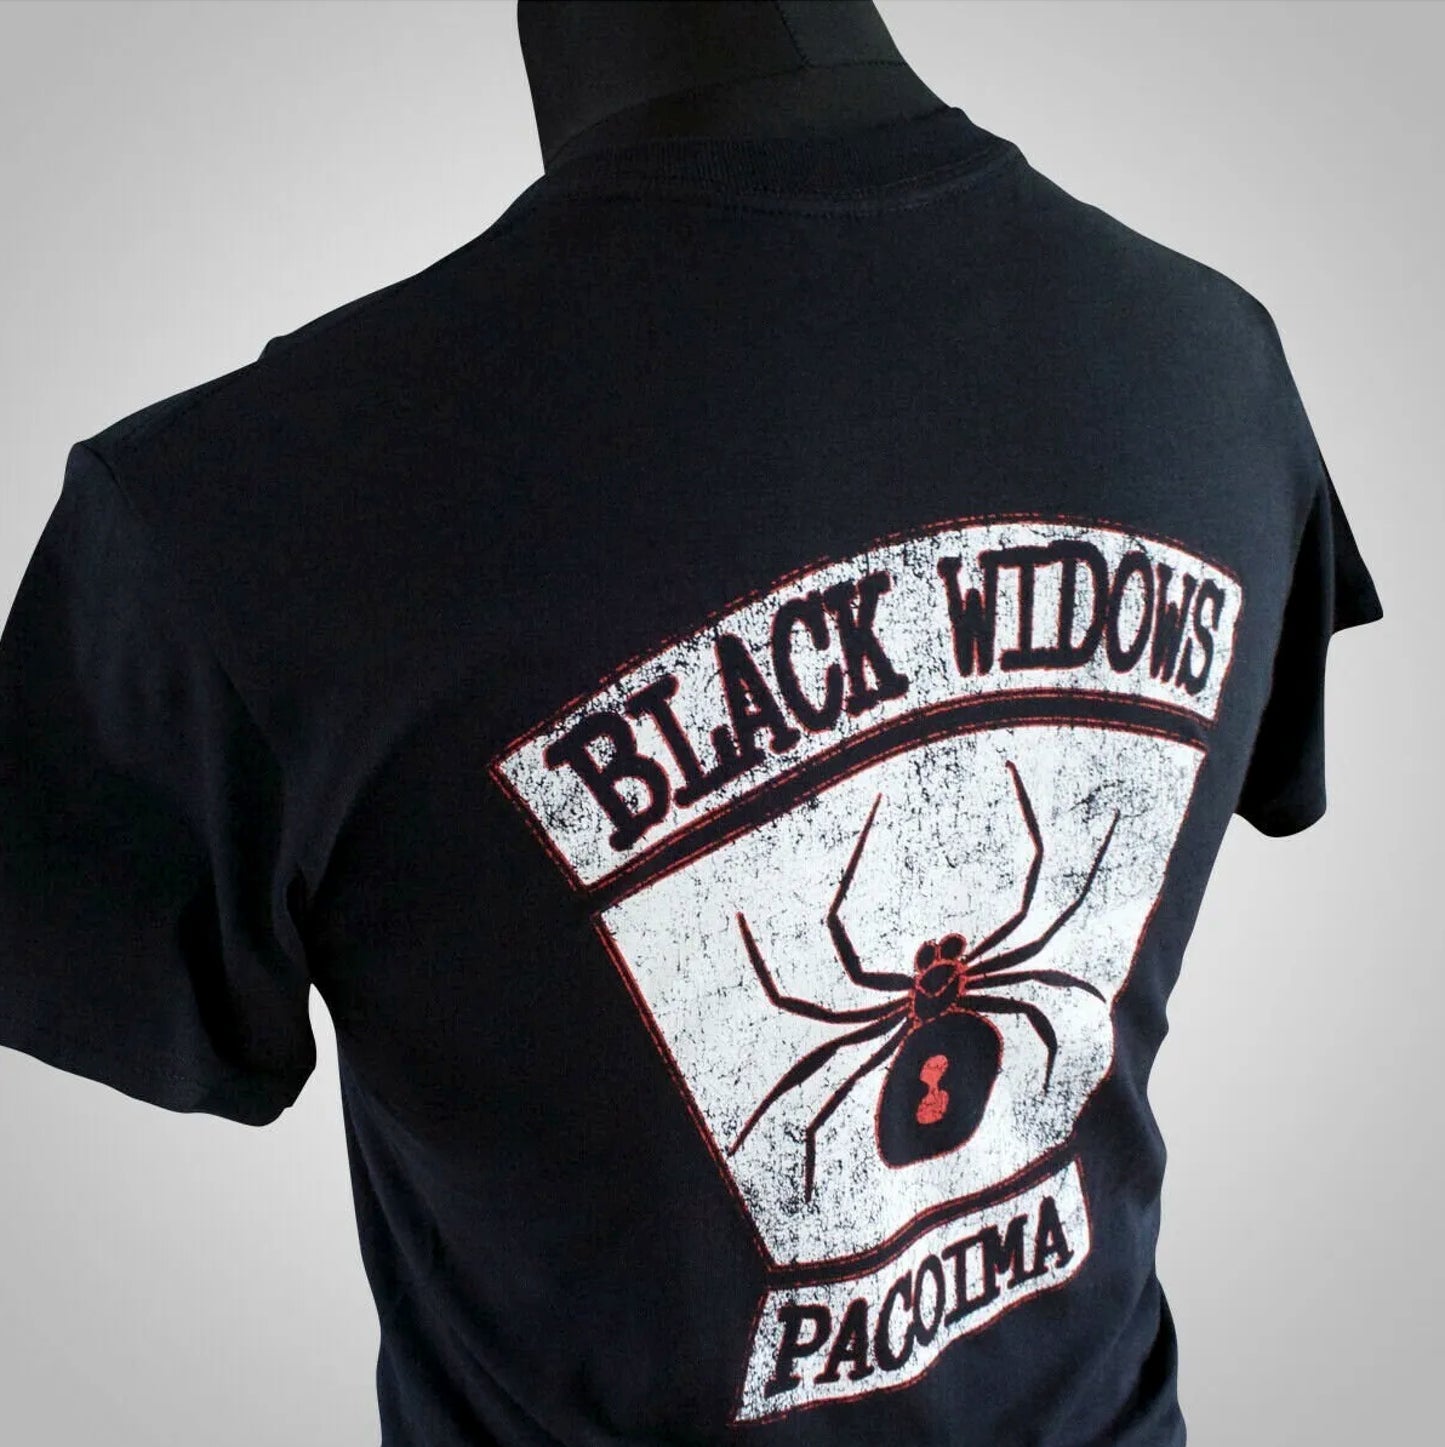 Black Widows Pacoima T Shirt